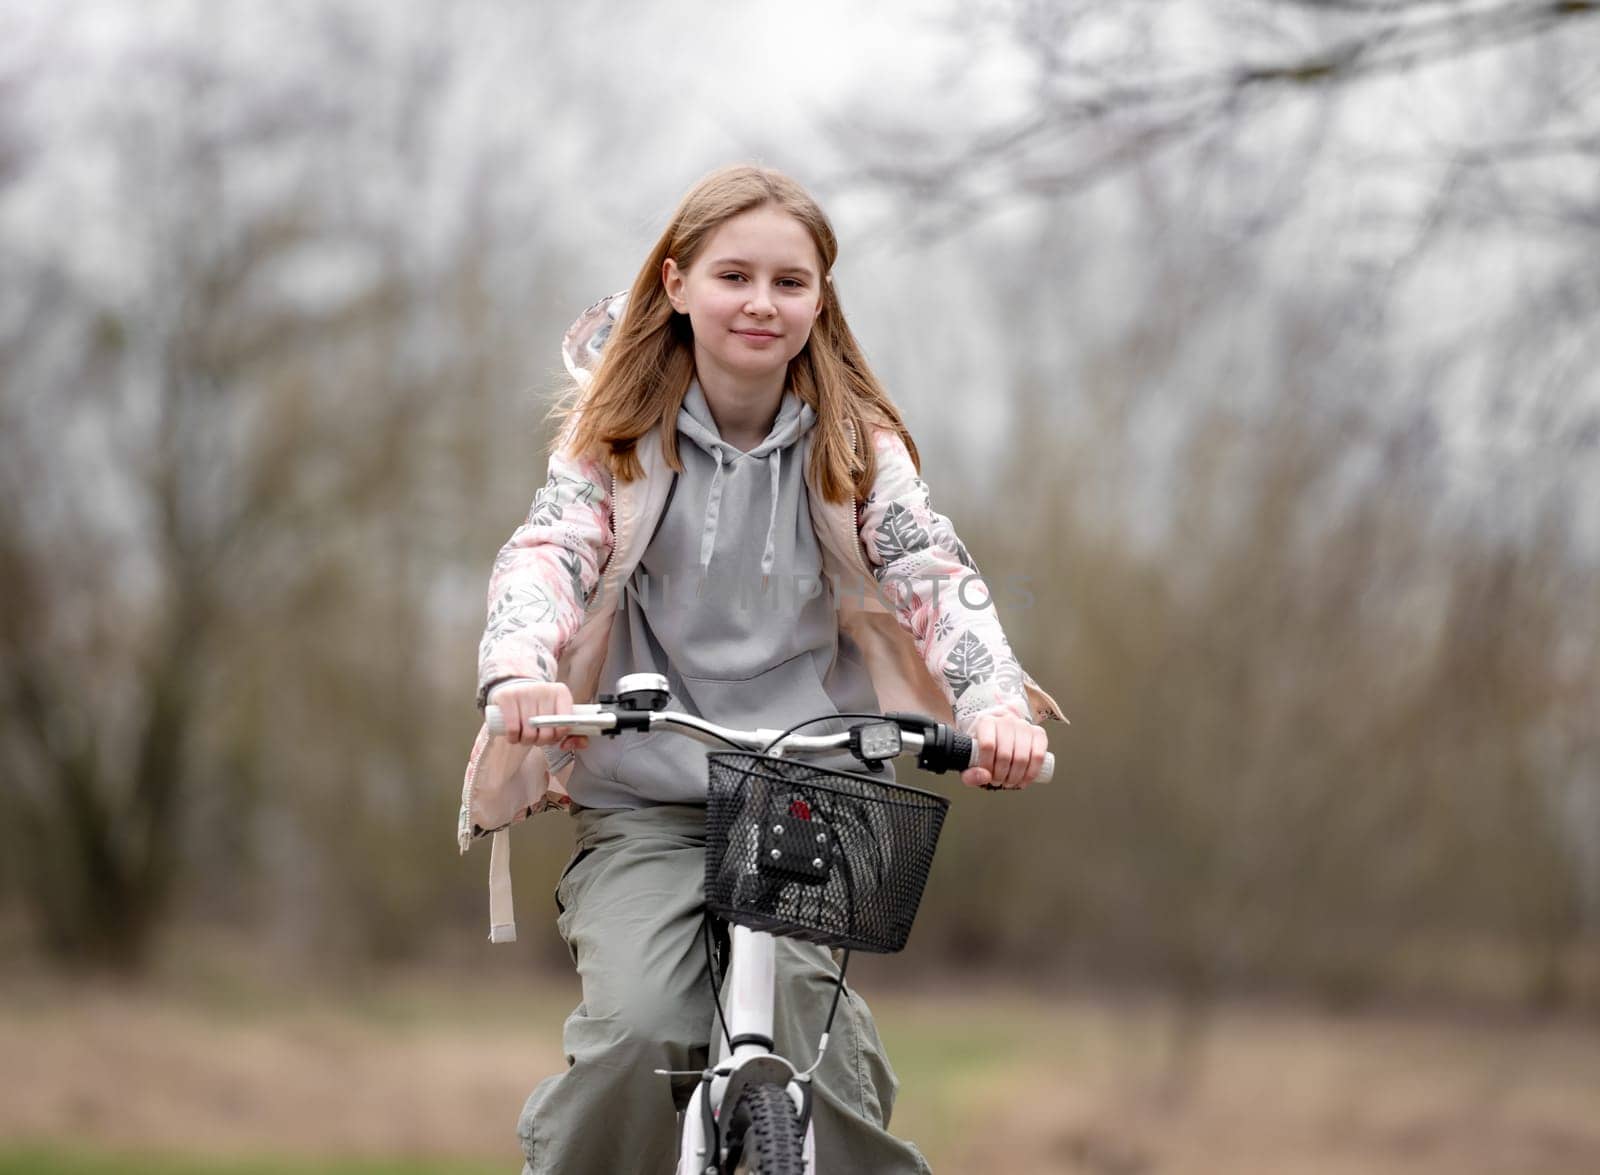 Smiling Girl Riding Bike by tan4ikk1